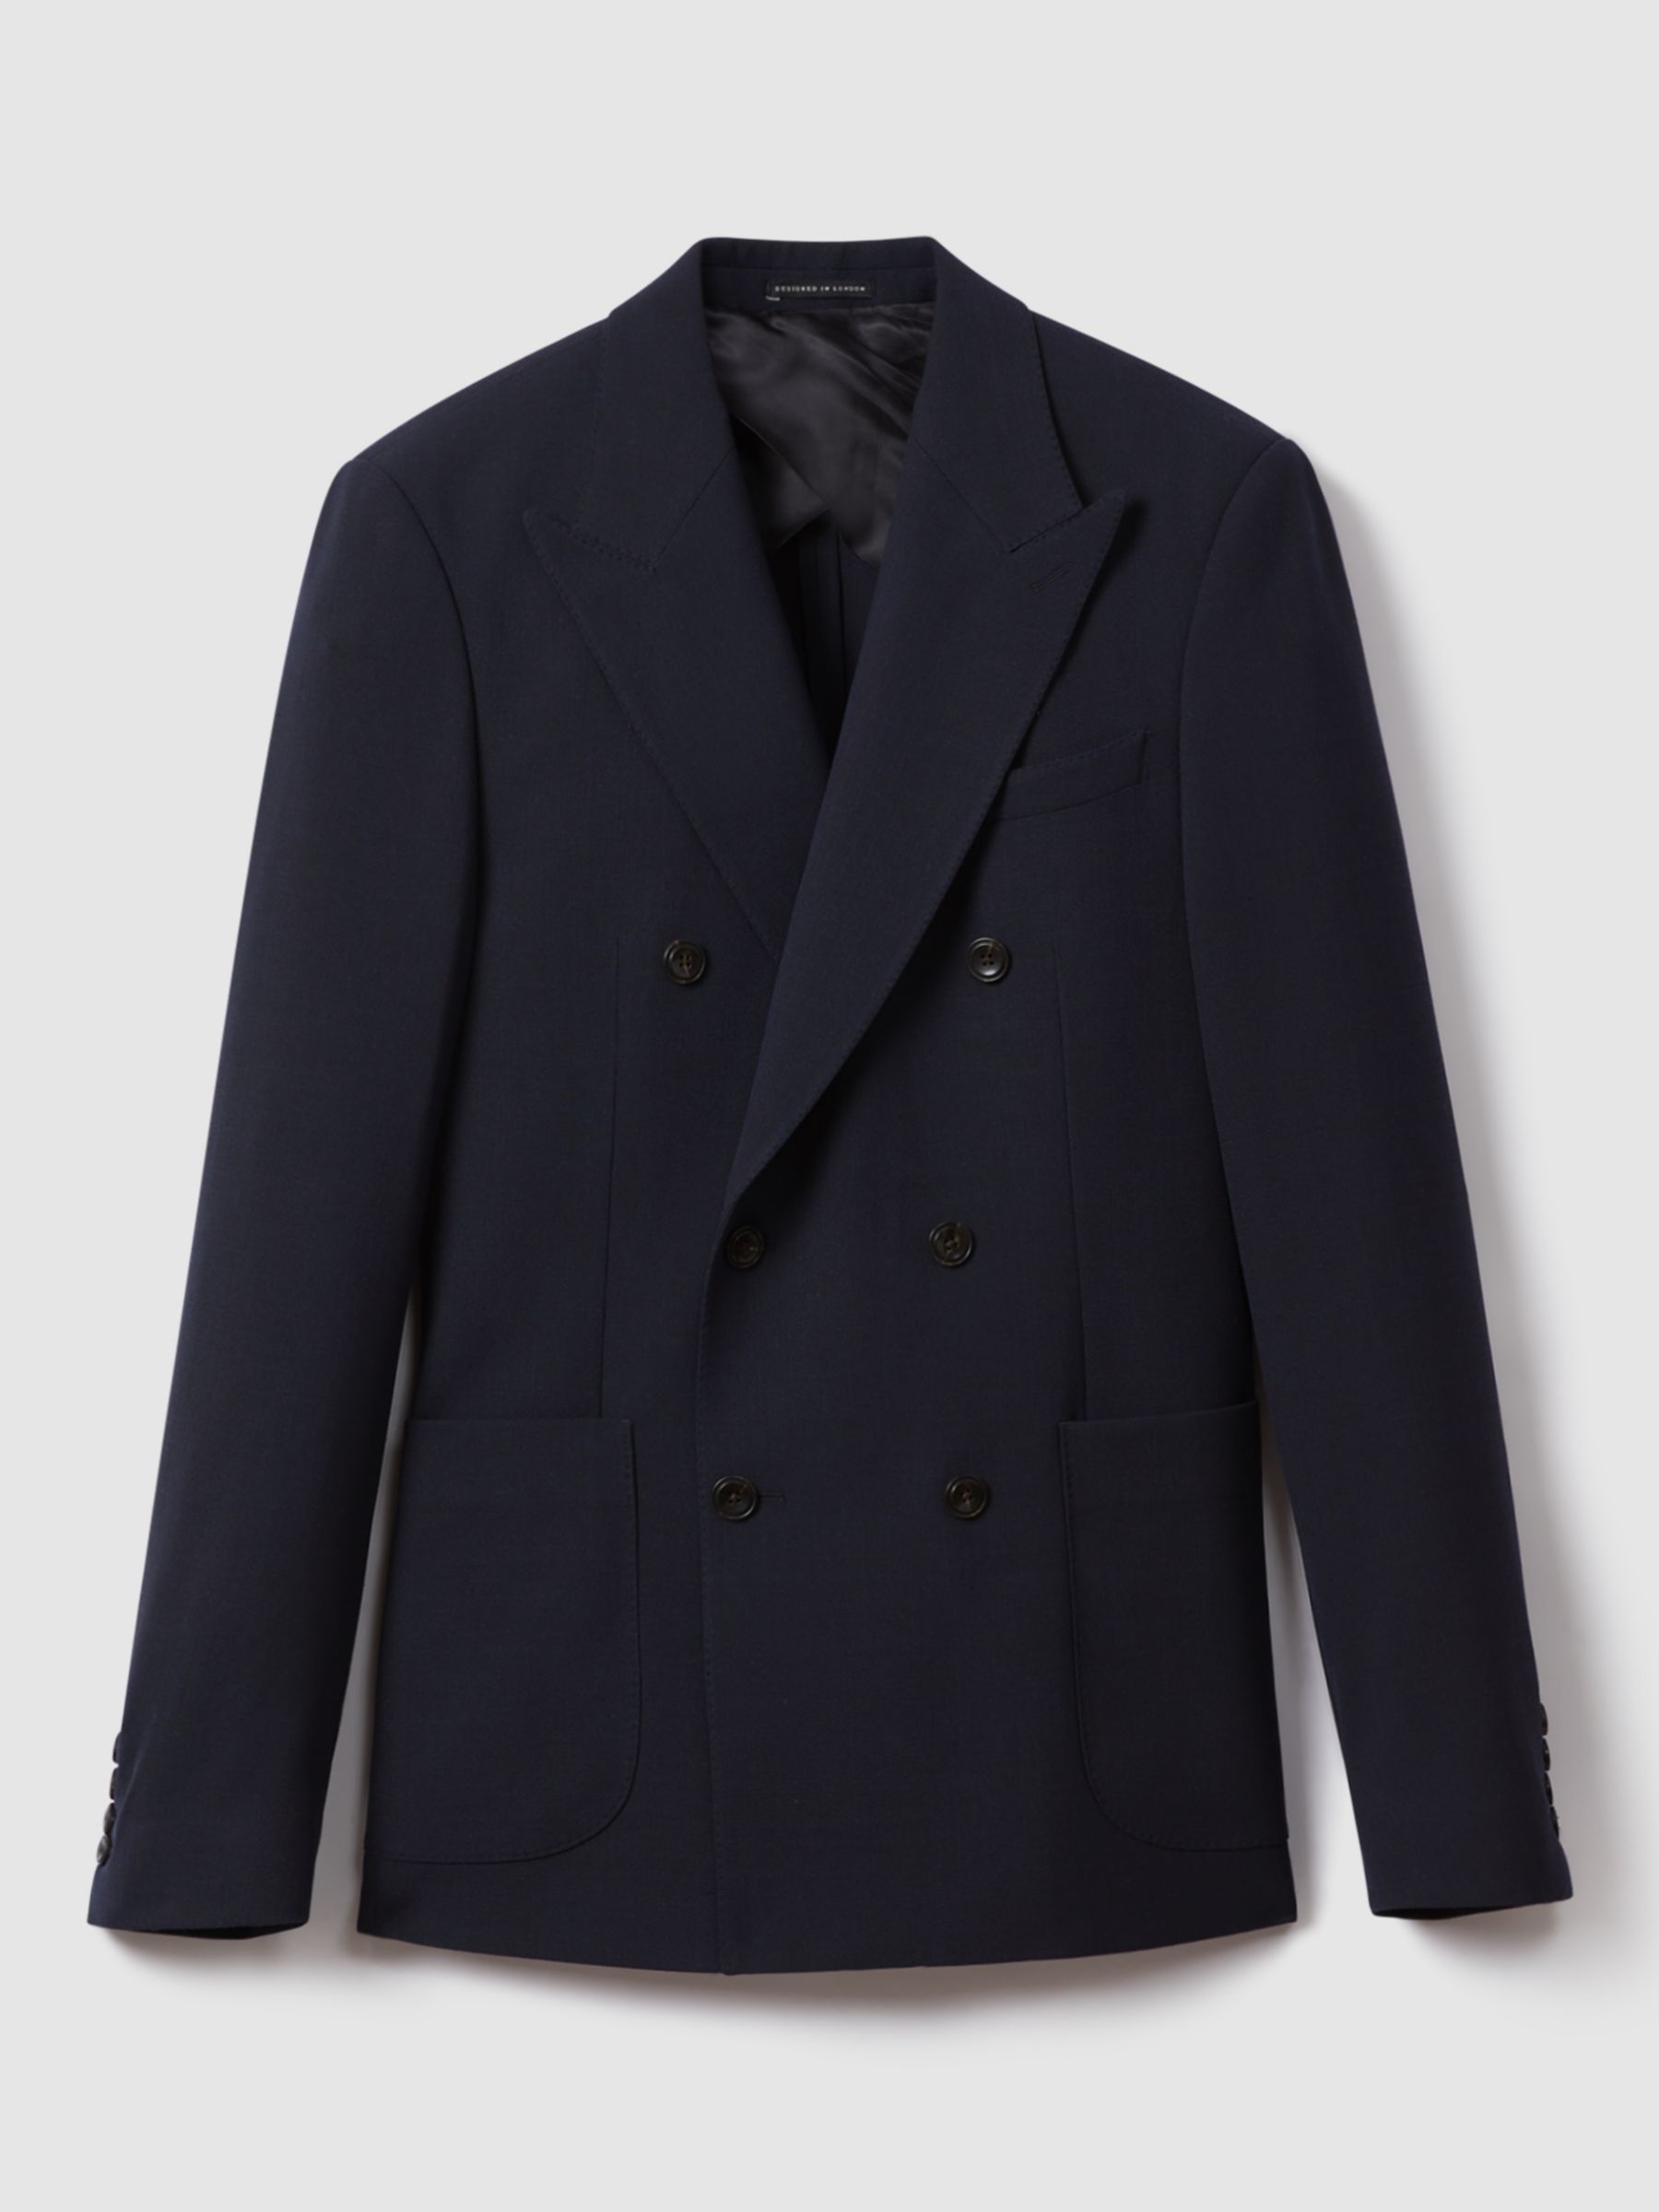 Reiss Belmont Wool Blend Suit Jacket, Navy, 36